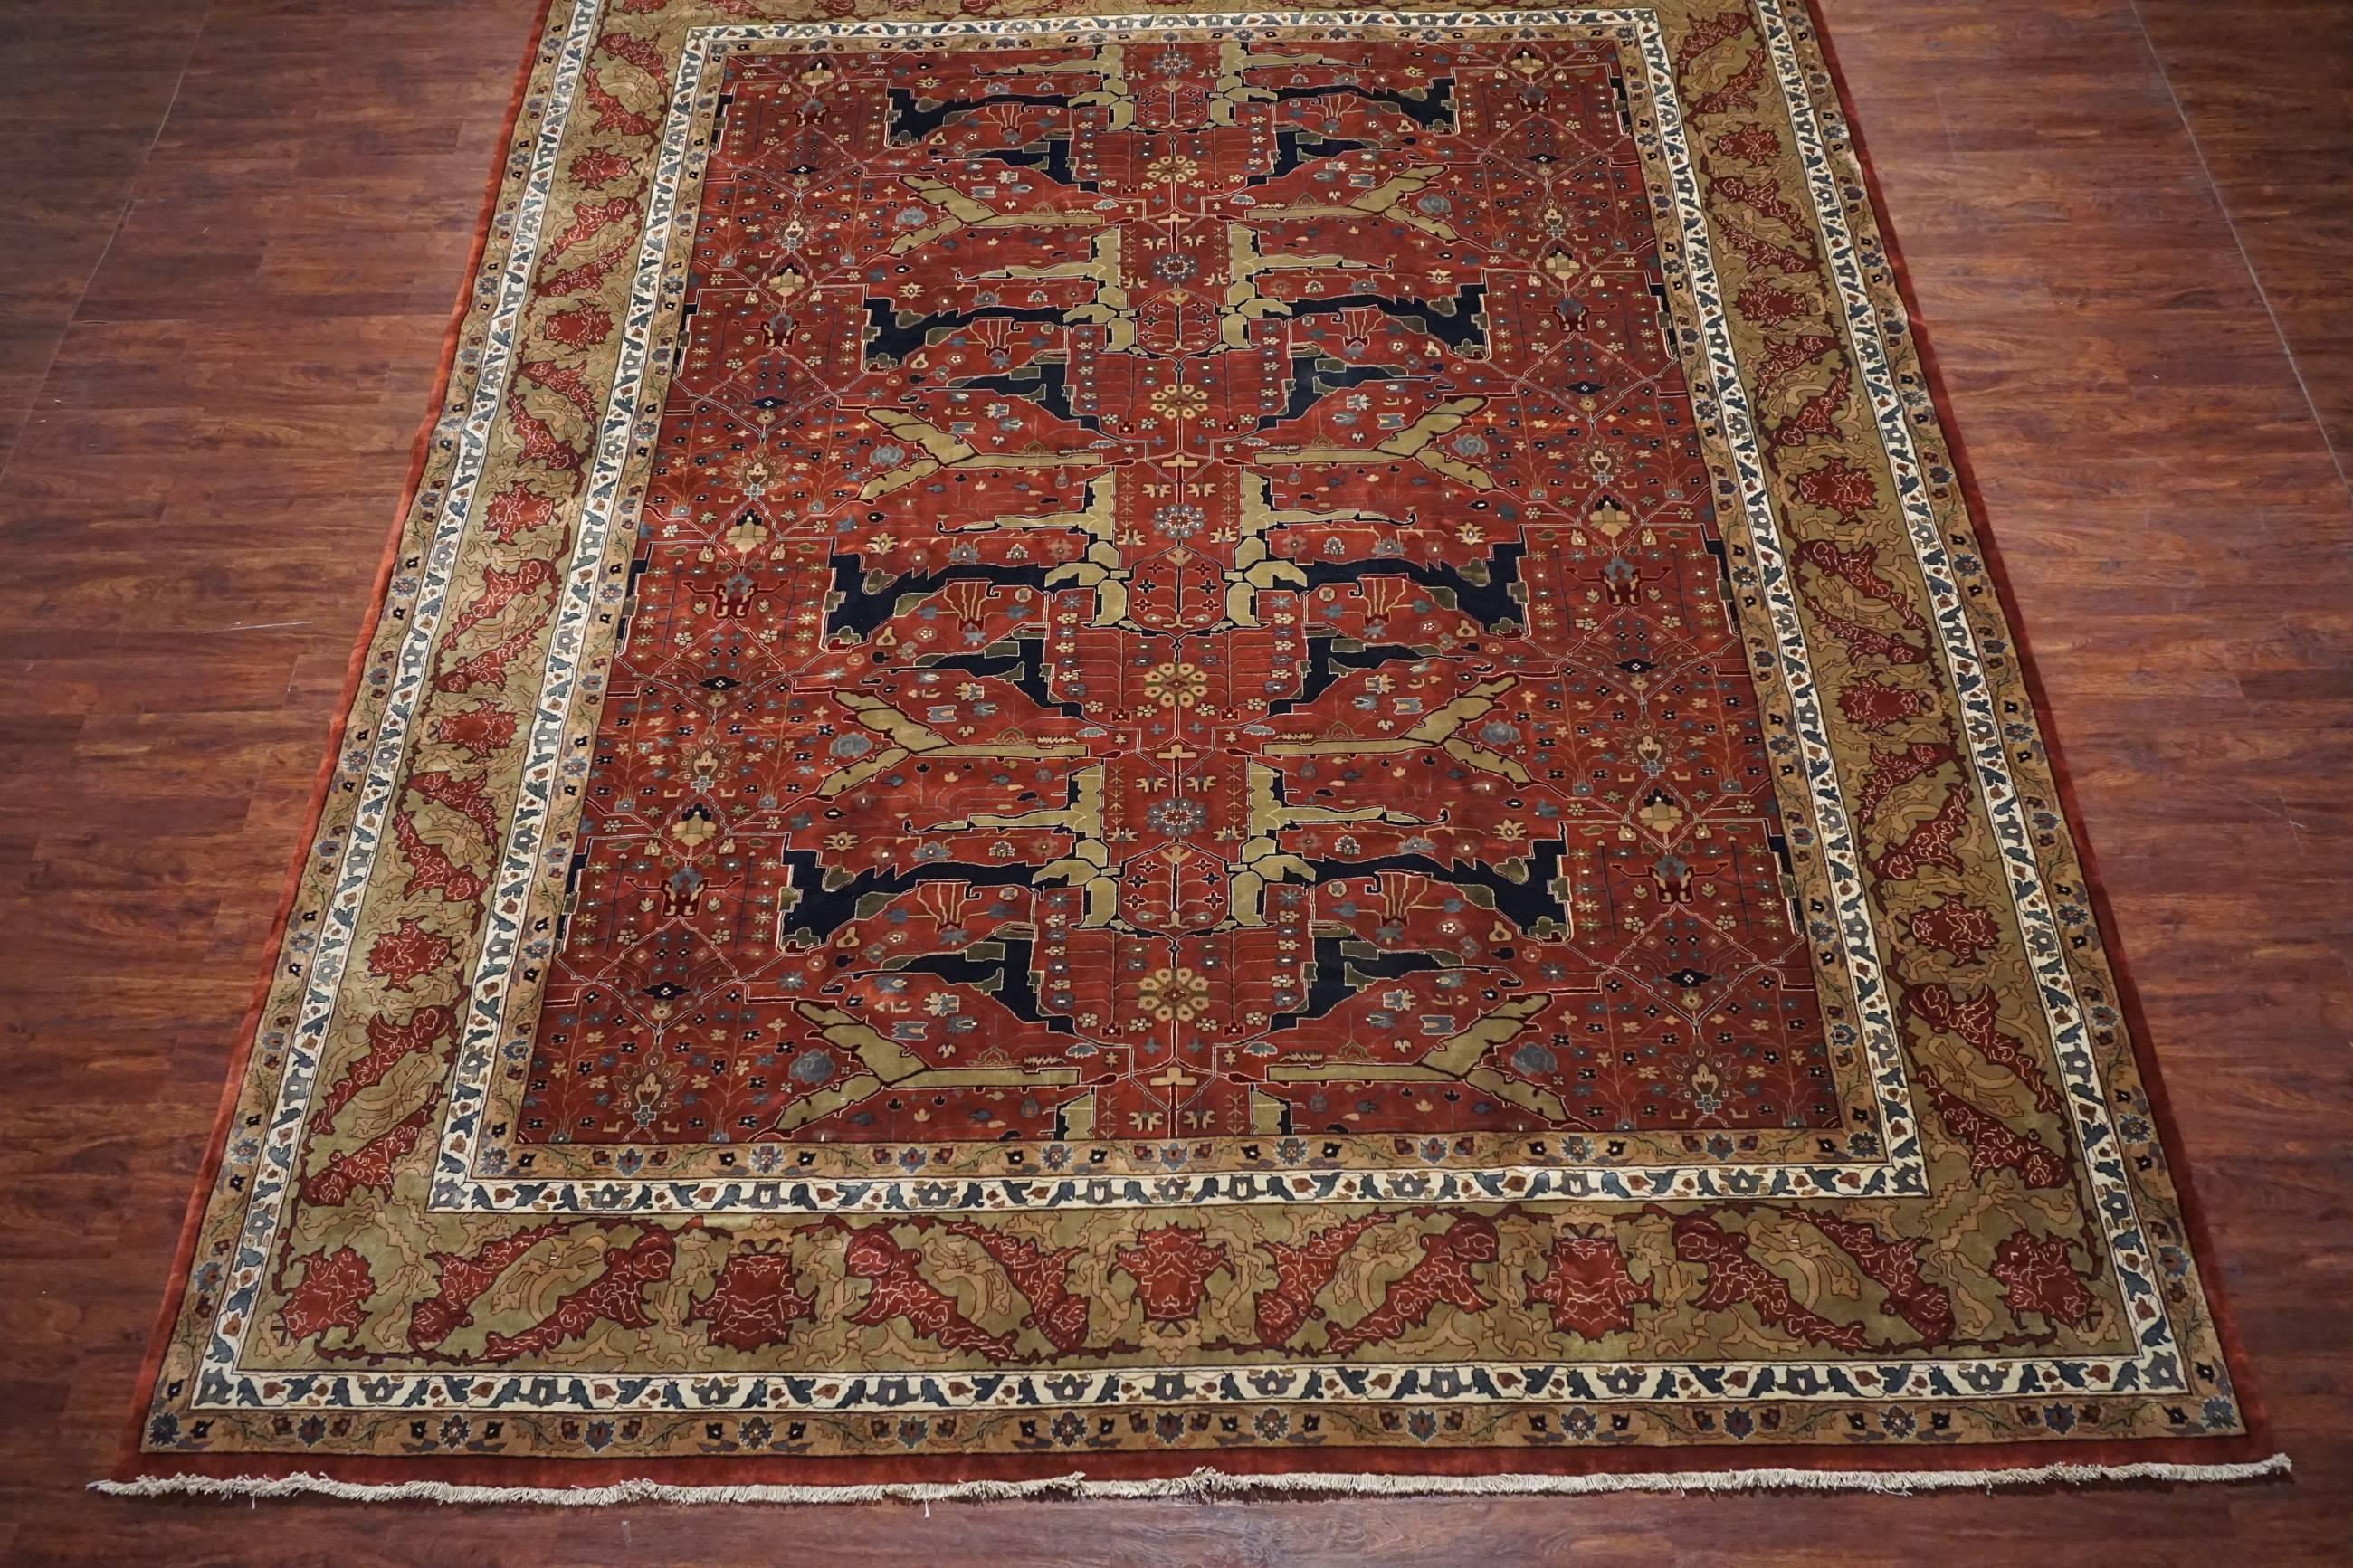 Fine Persian Bidjar Area rug

2000

Measures: 11' 10